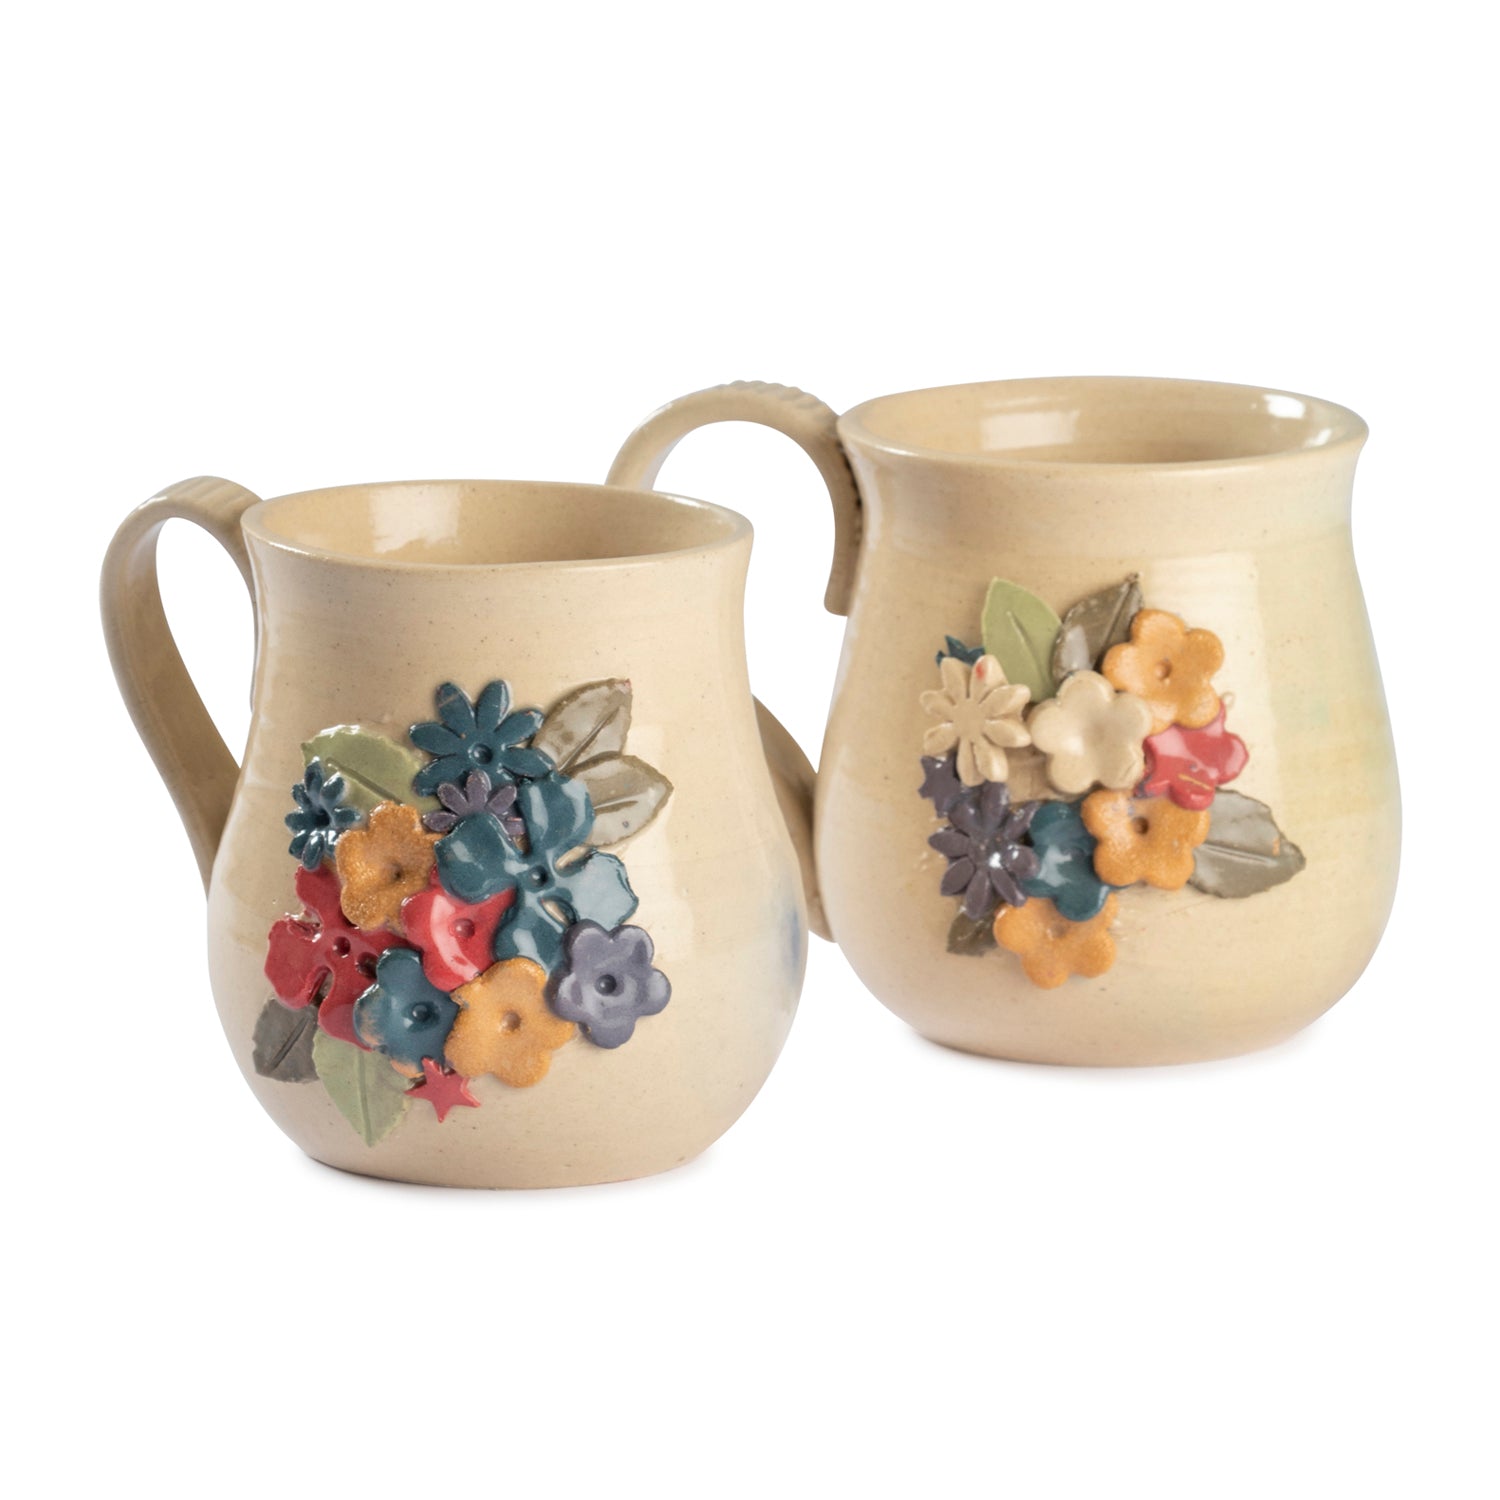 Stoneware Ceramic Mugs - Set of 2 - 3x4.5